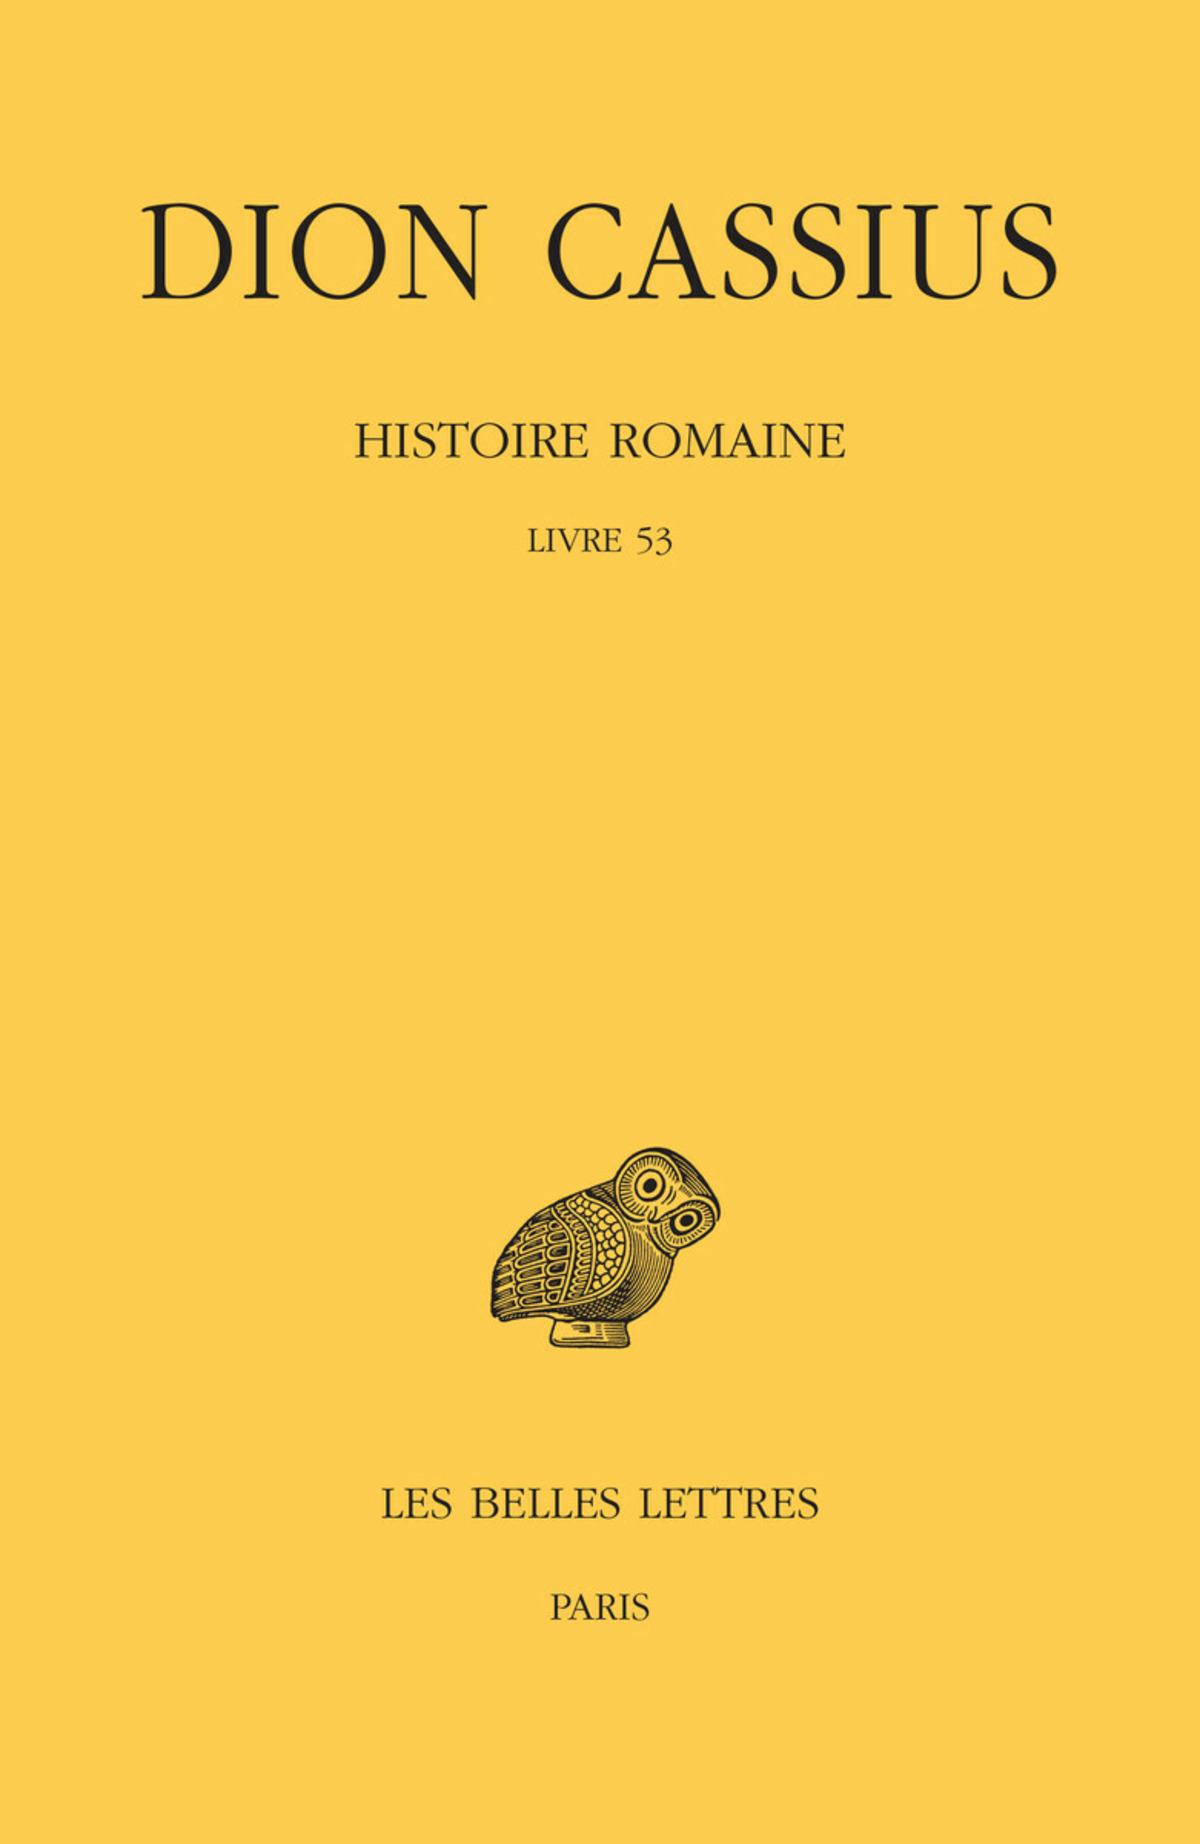 Histoire romaine. Livre 53